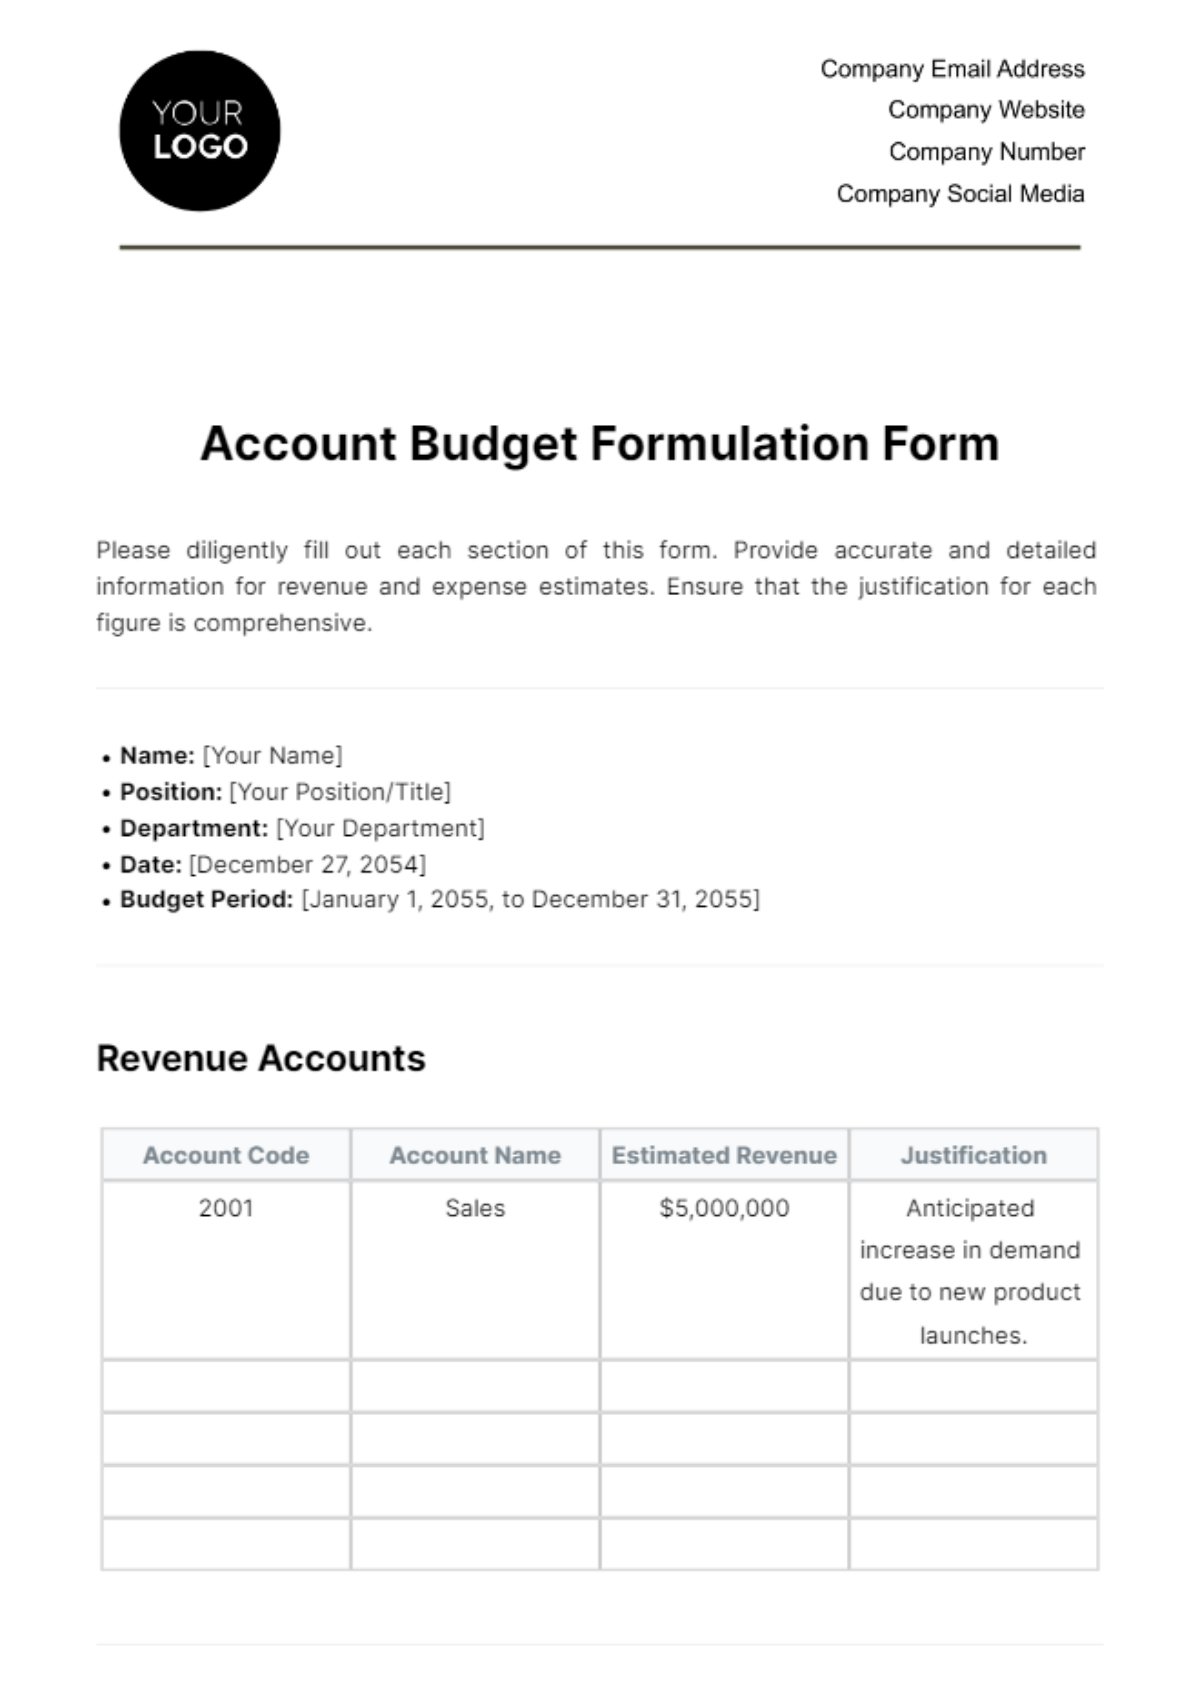 Account Budget Formulation Form Template